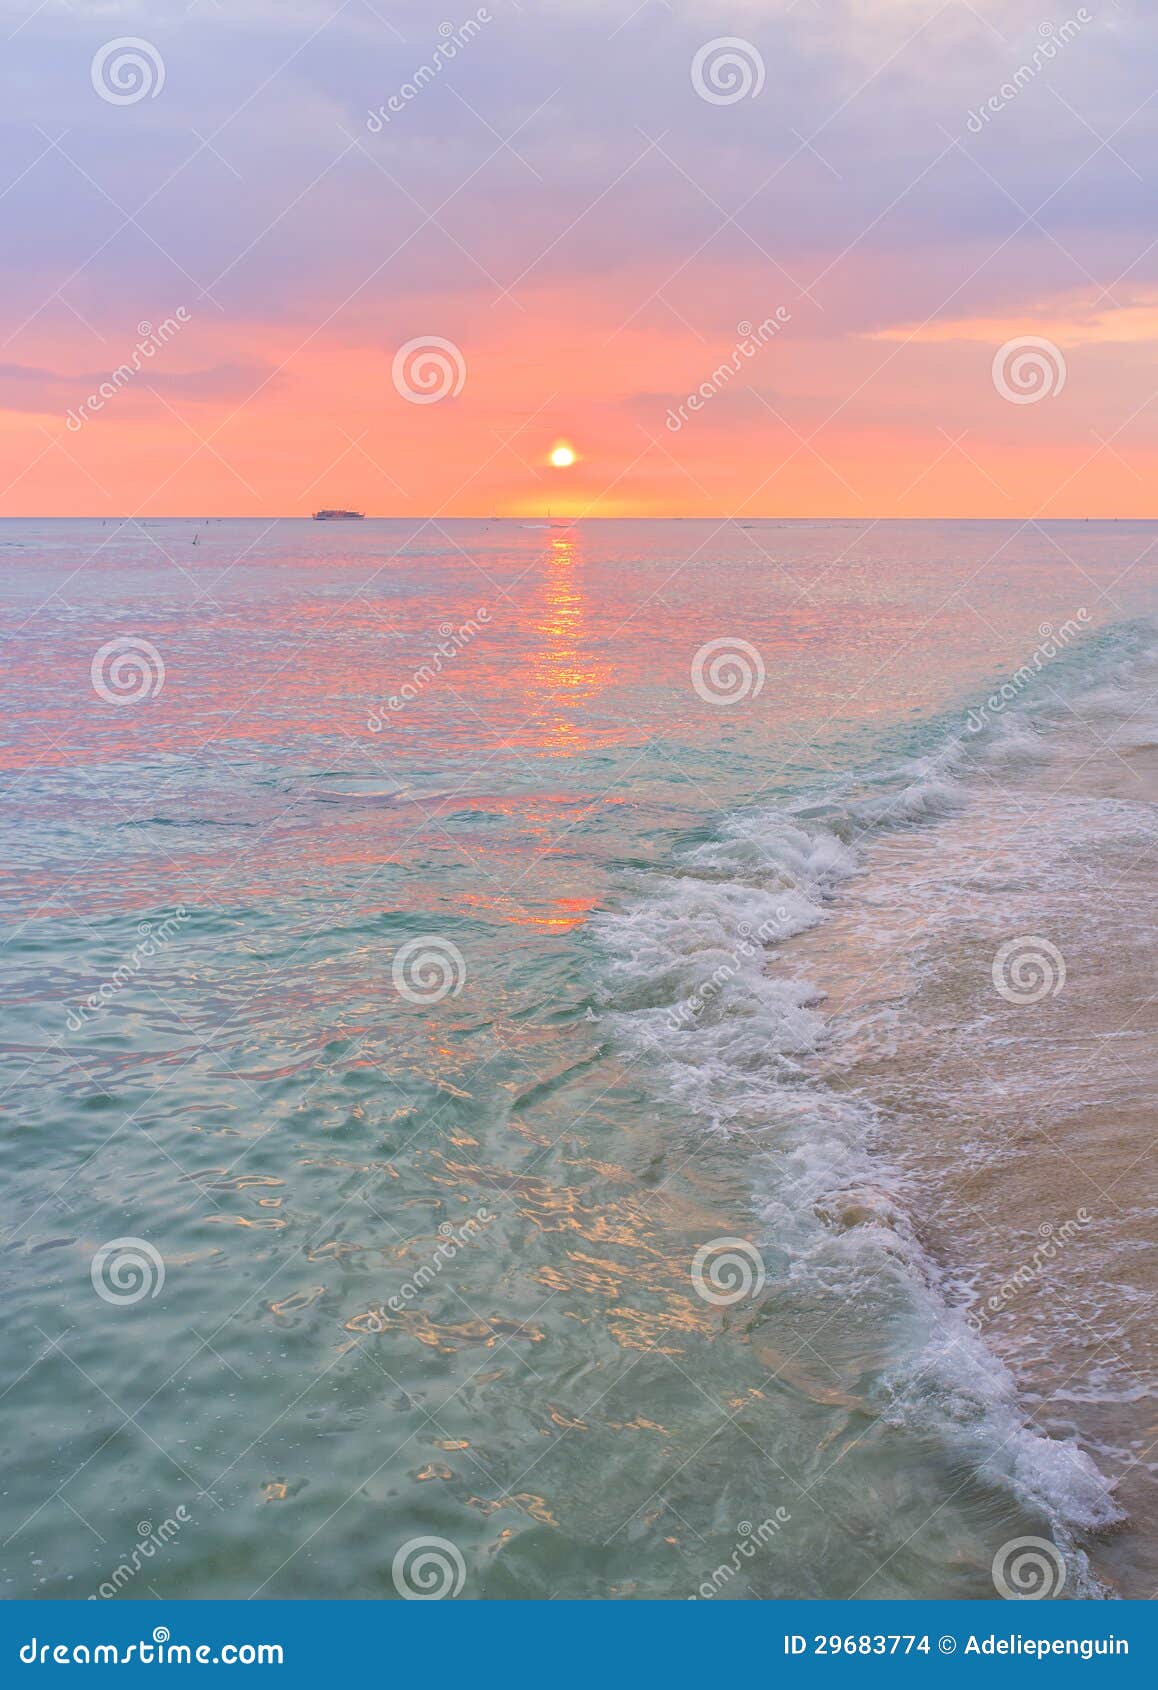 waikki beach sunset, honolulu, oahu hawaii